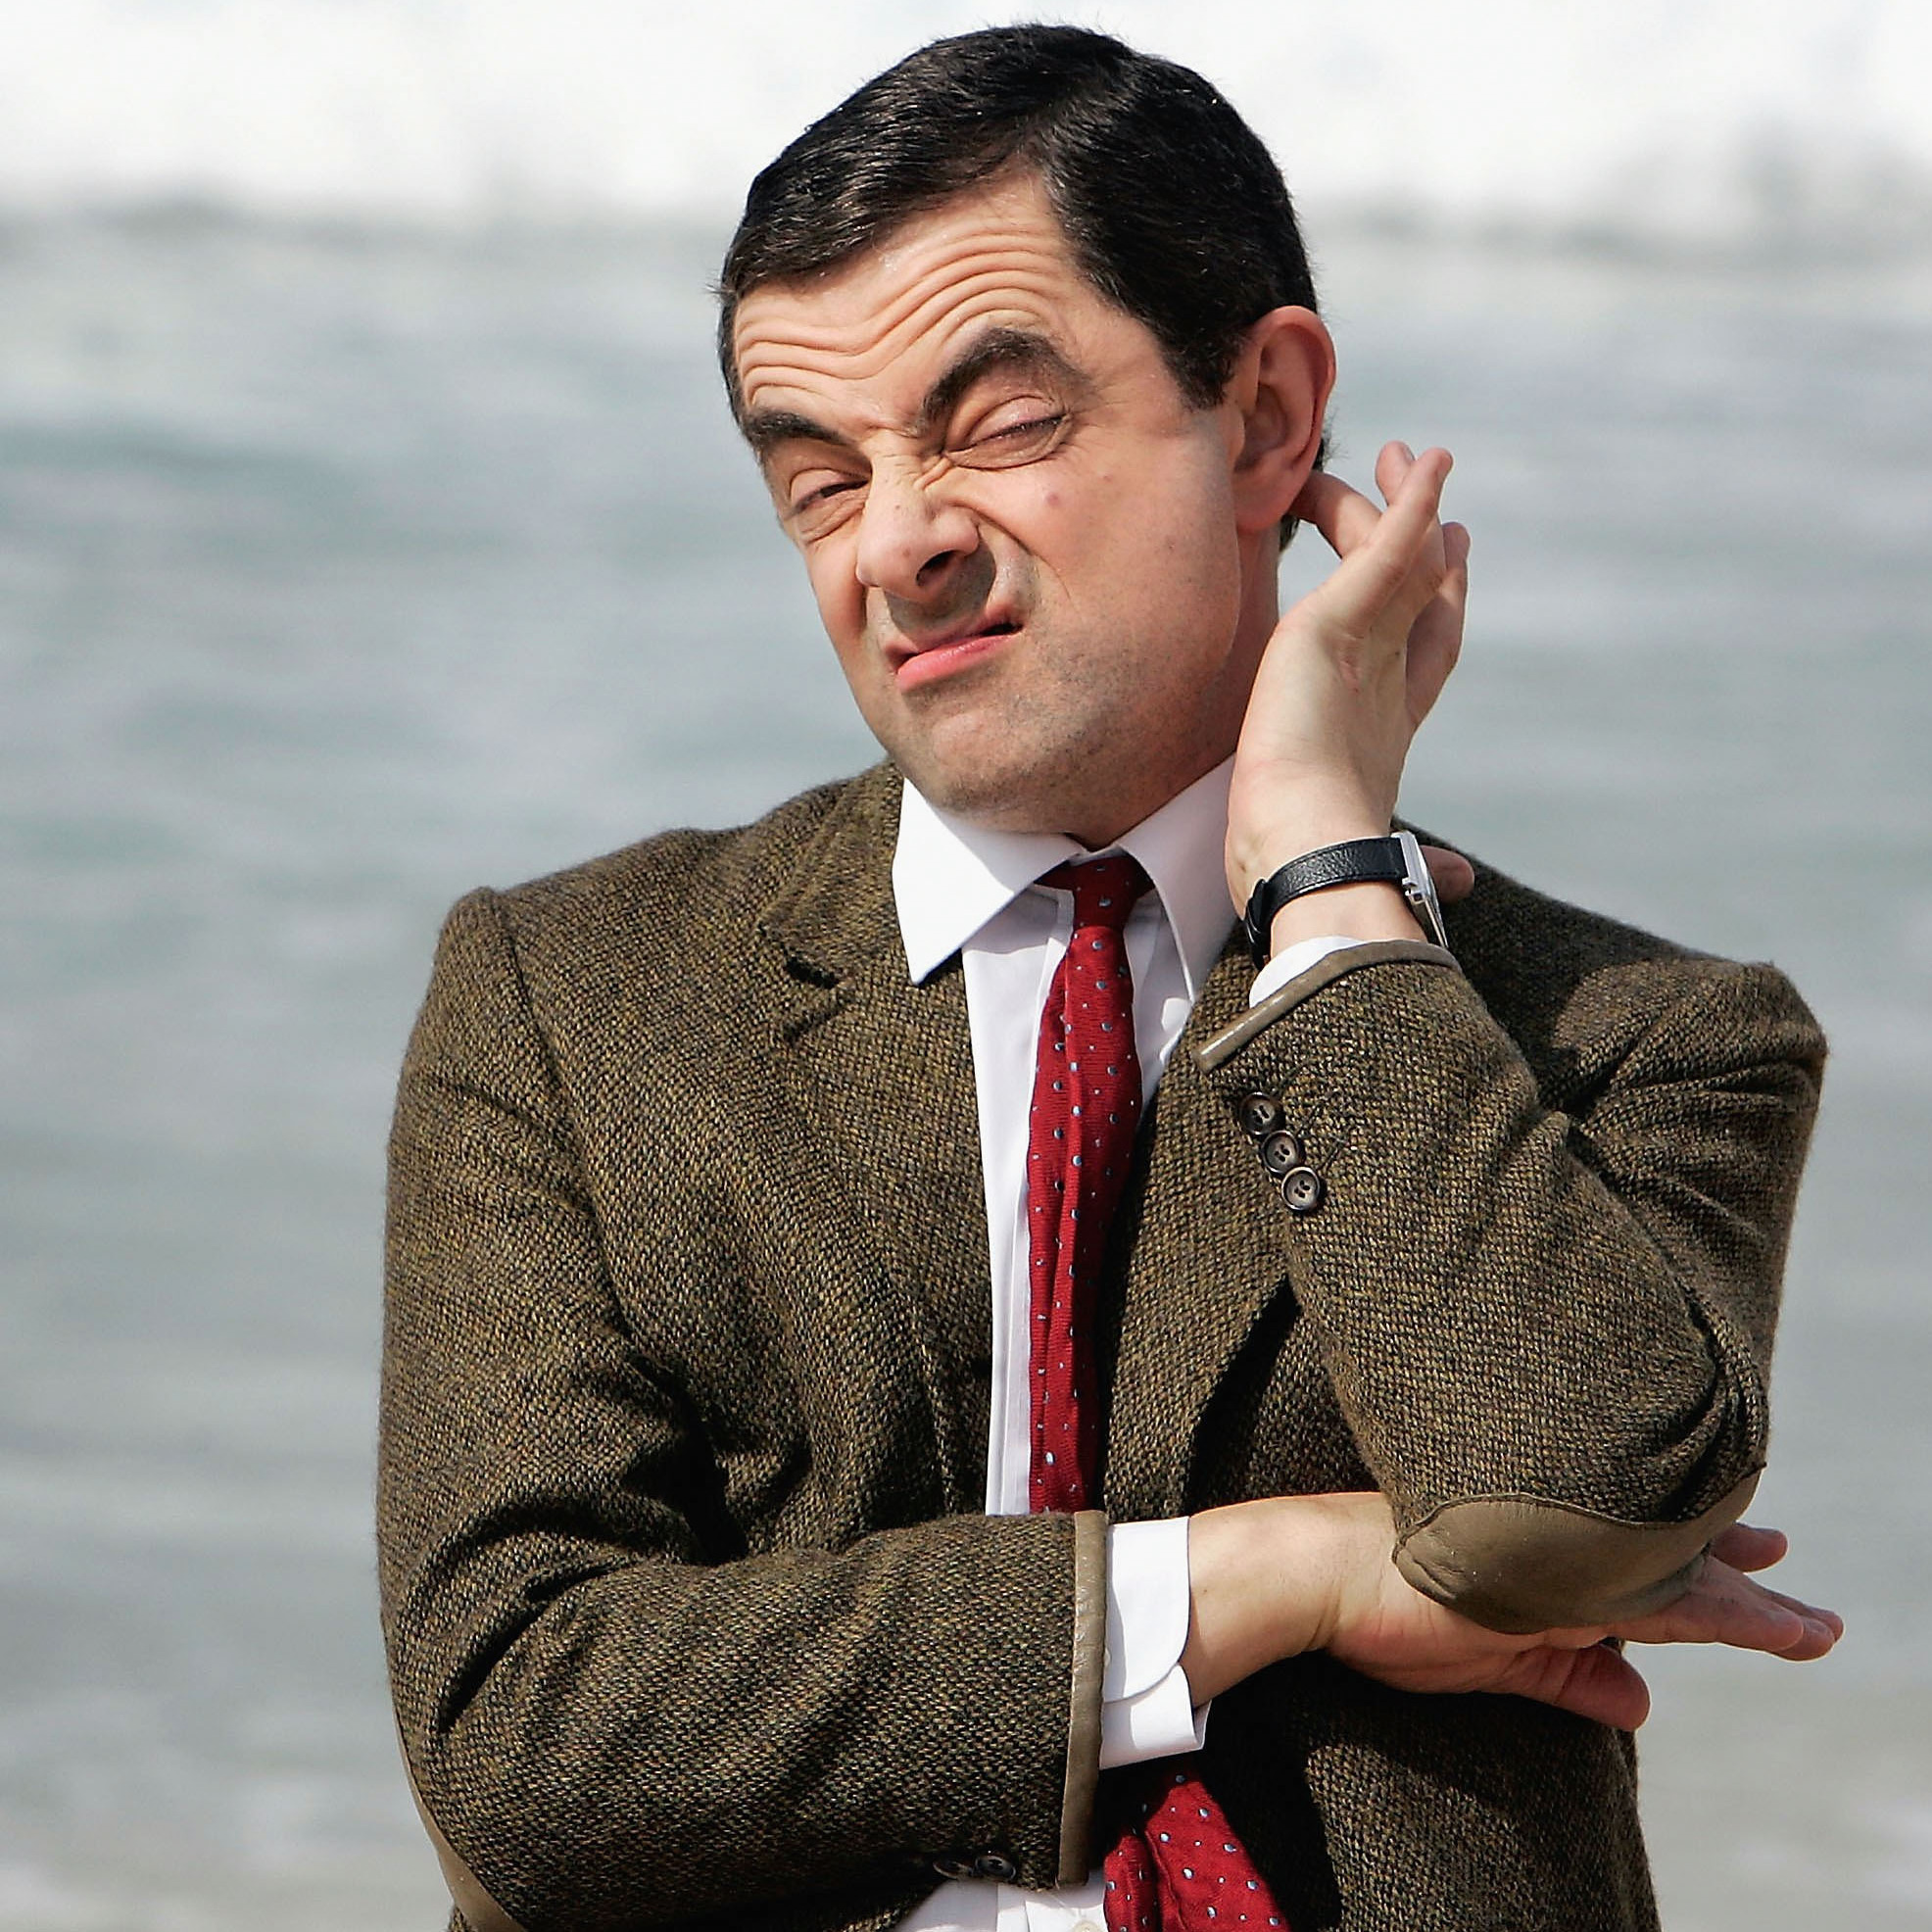 Rowan Atkinson (in character as Mr. Bean) in 2007.